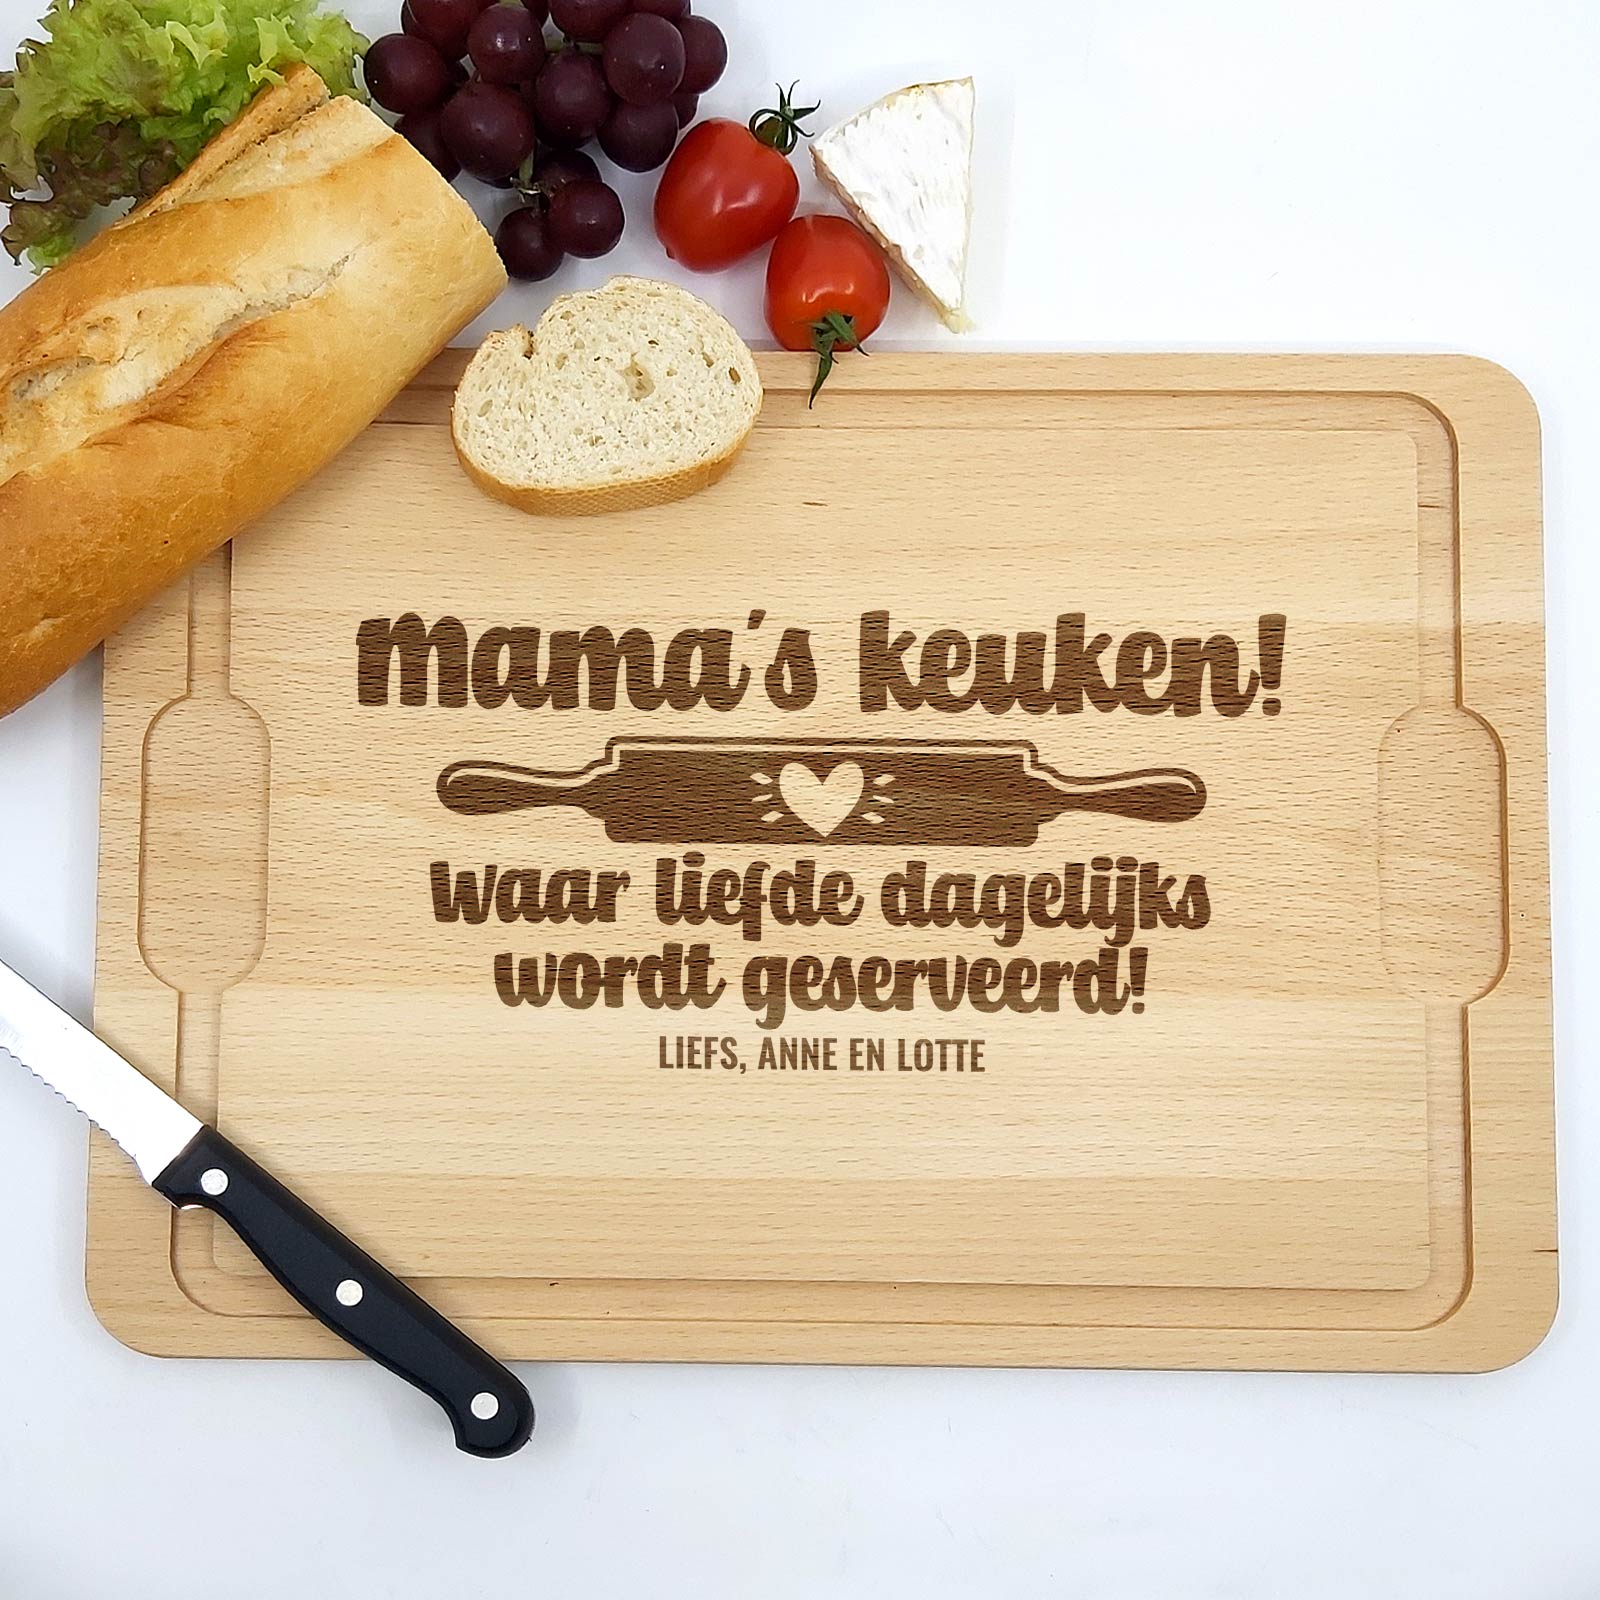 Mama's keuken - Snijplank - Bella Mia